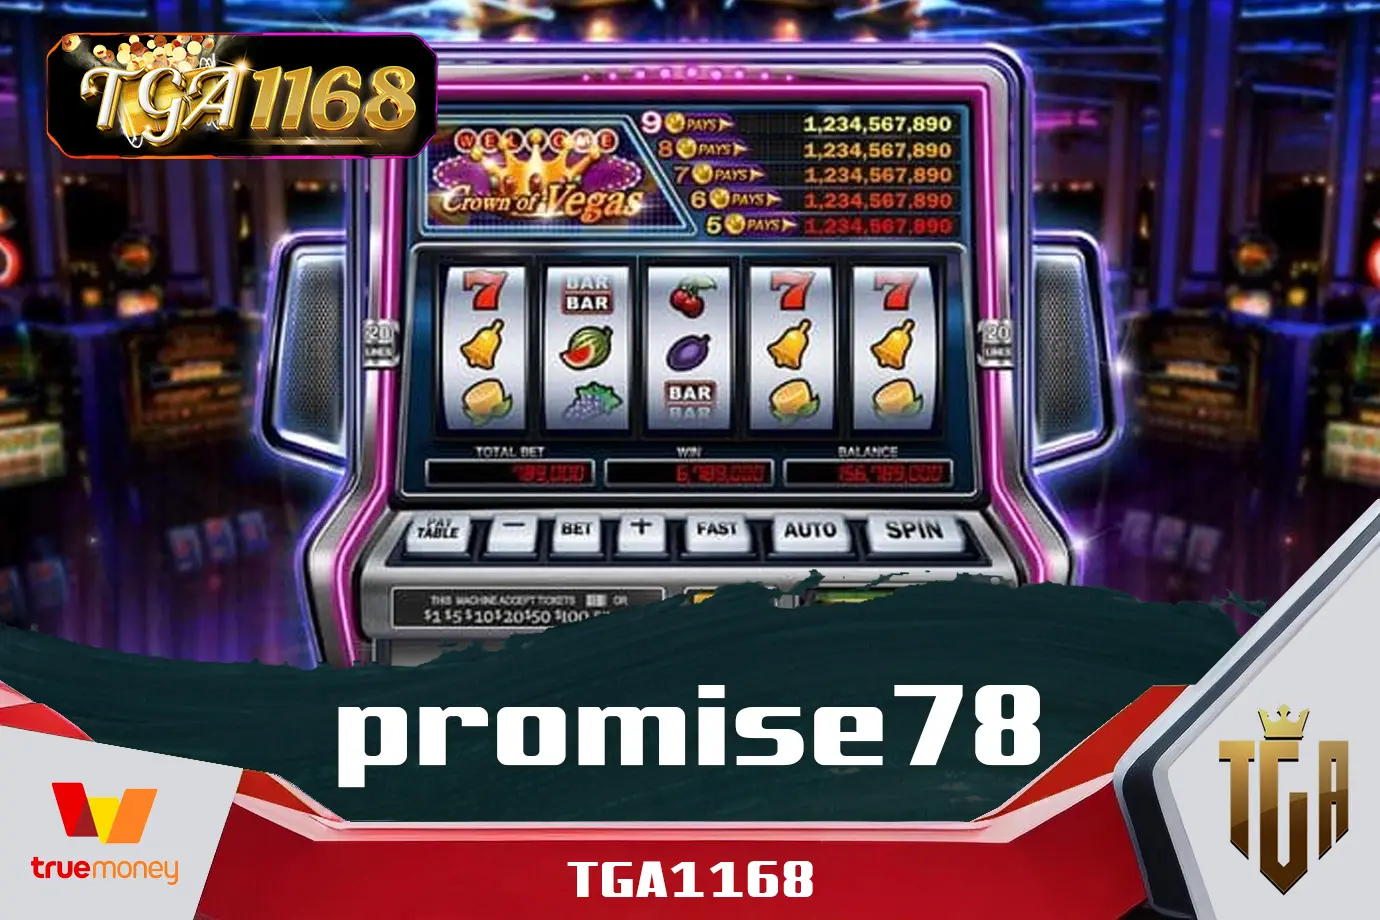 promise78